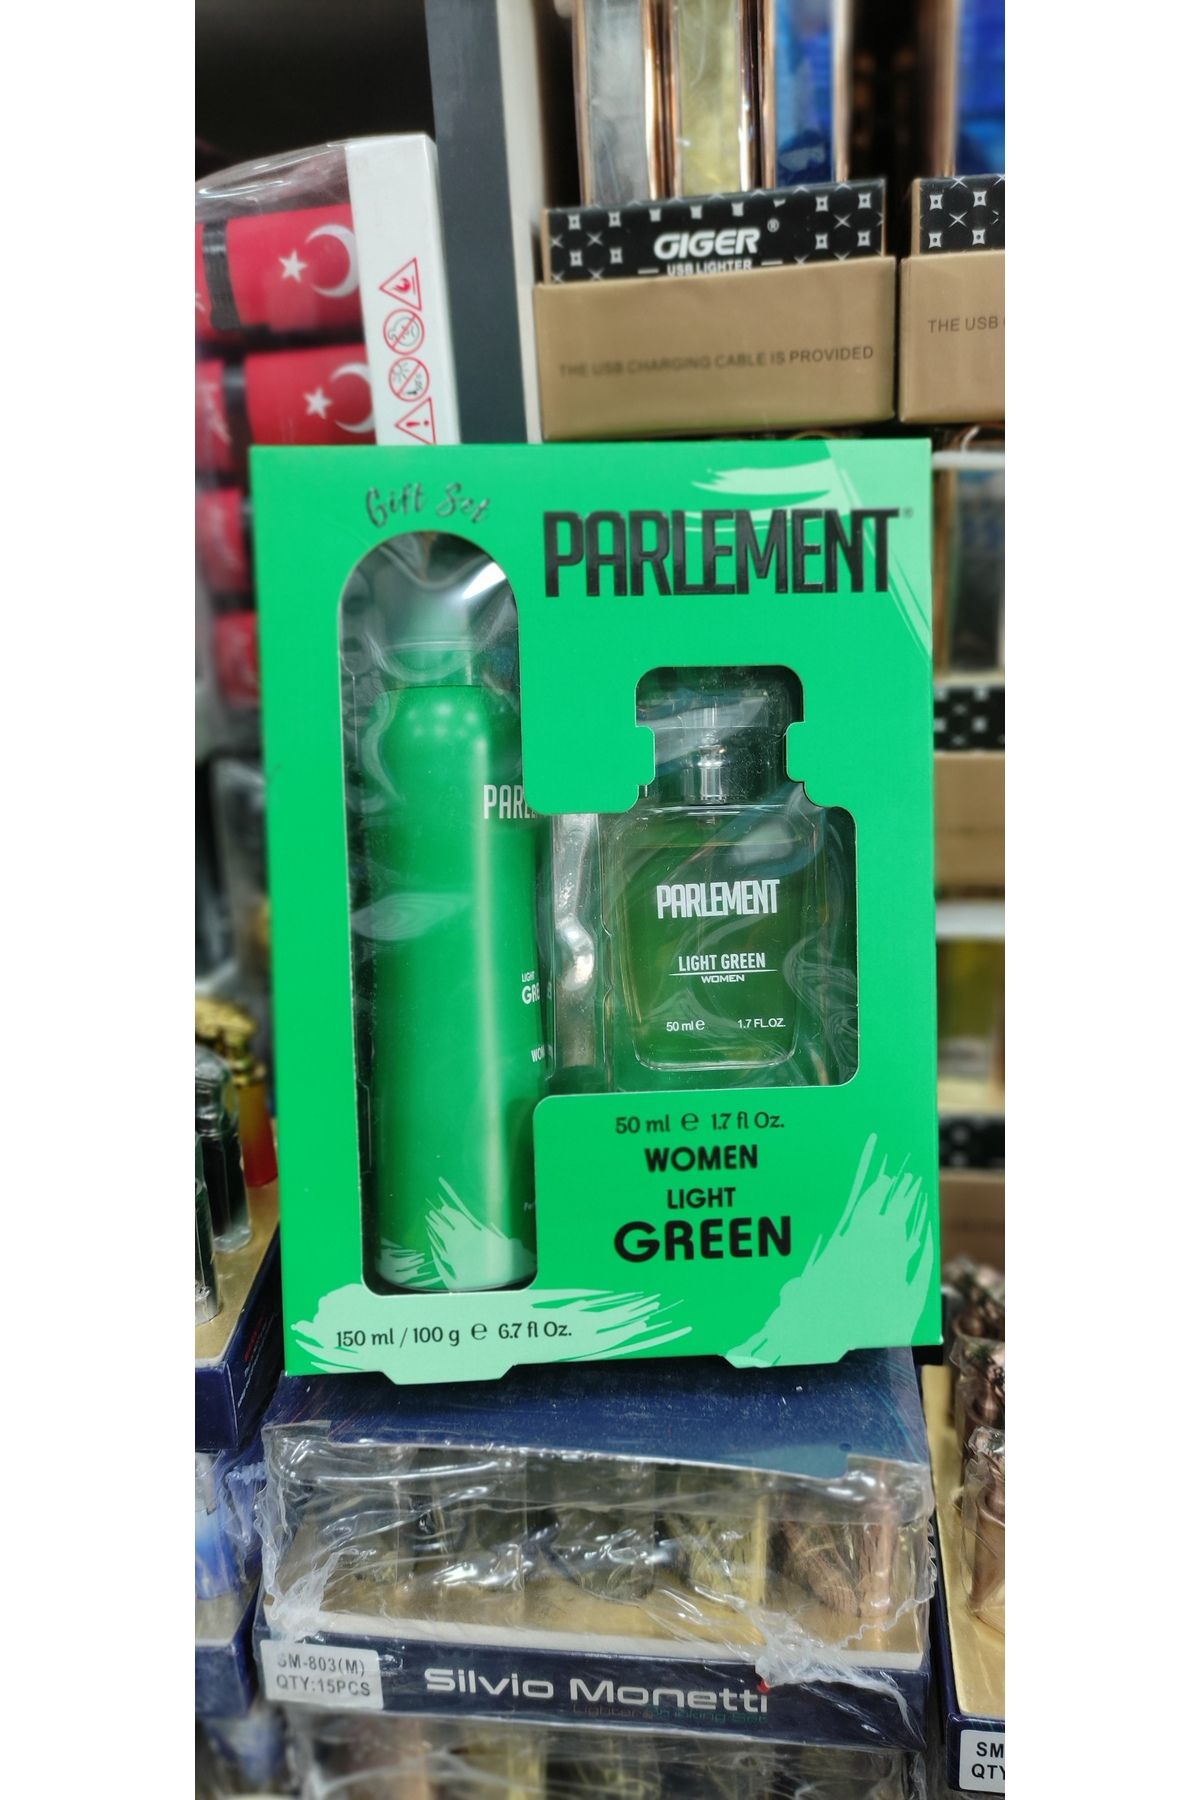 Parlement Kadın parlement parfüm seti